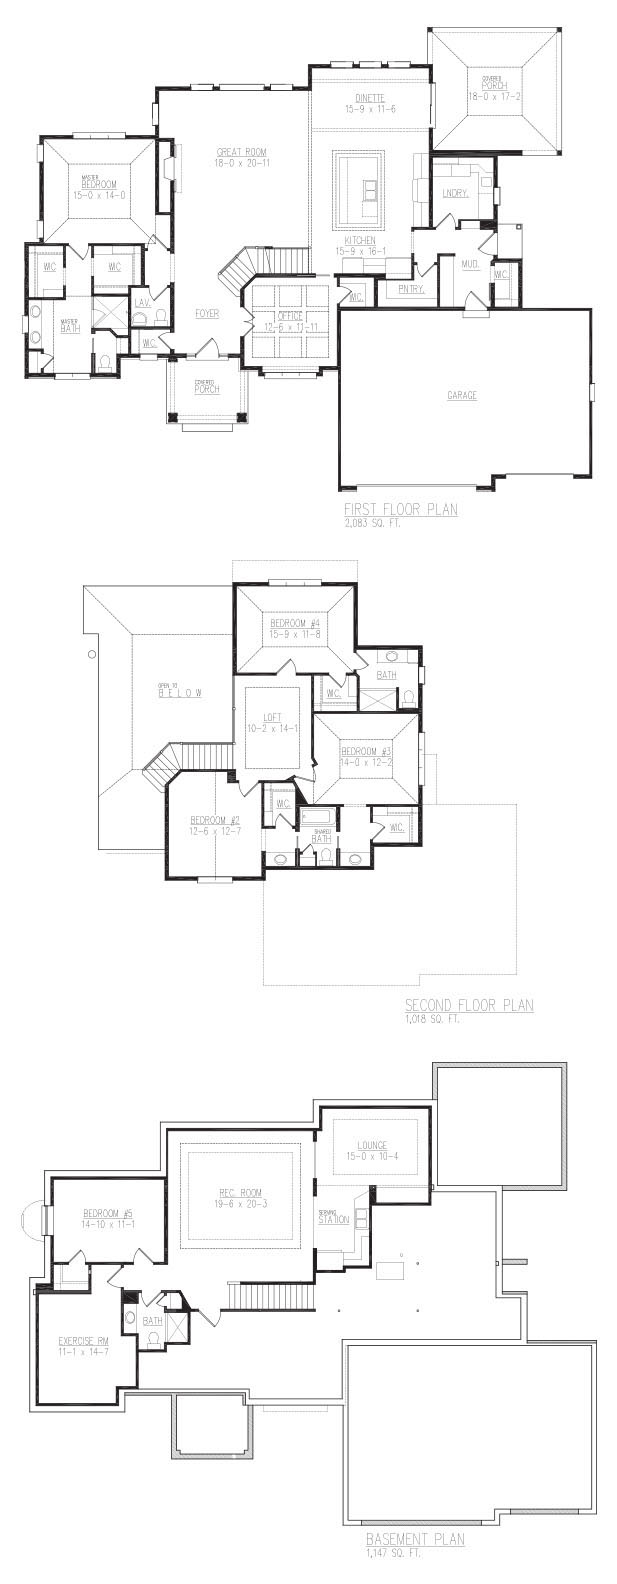 Victory Homes of Wisconsin - Madison custom home builder - Braxton floor plan